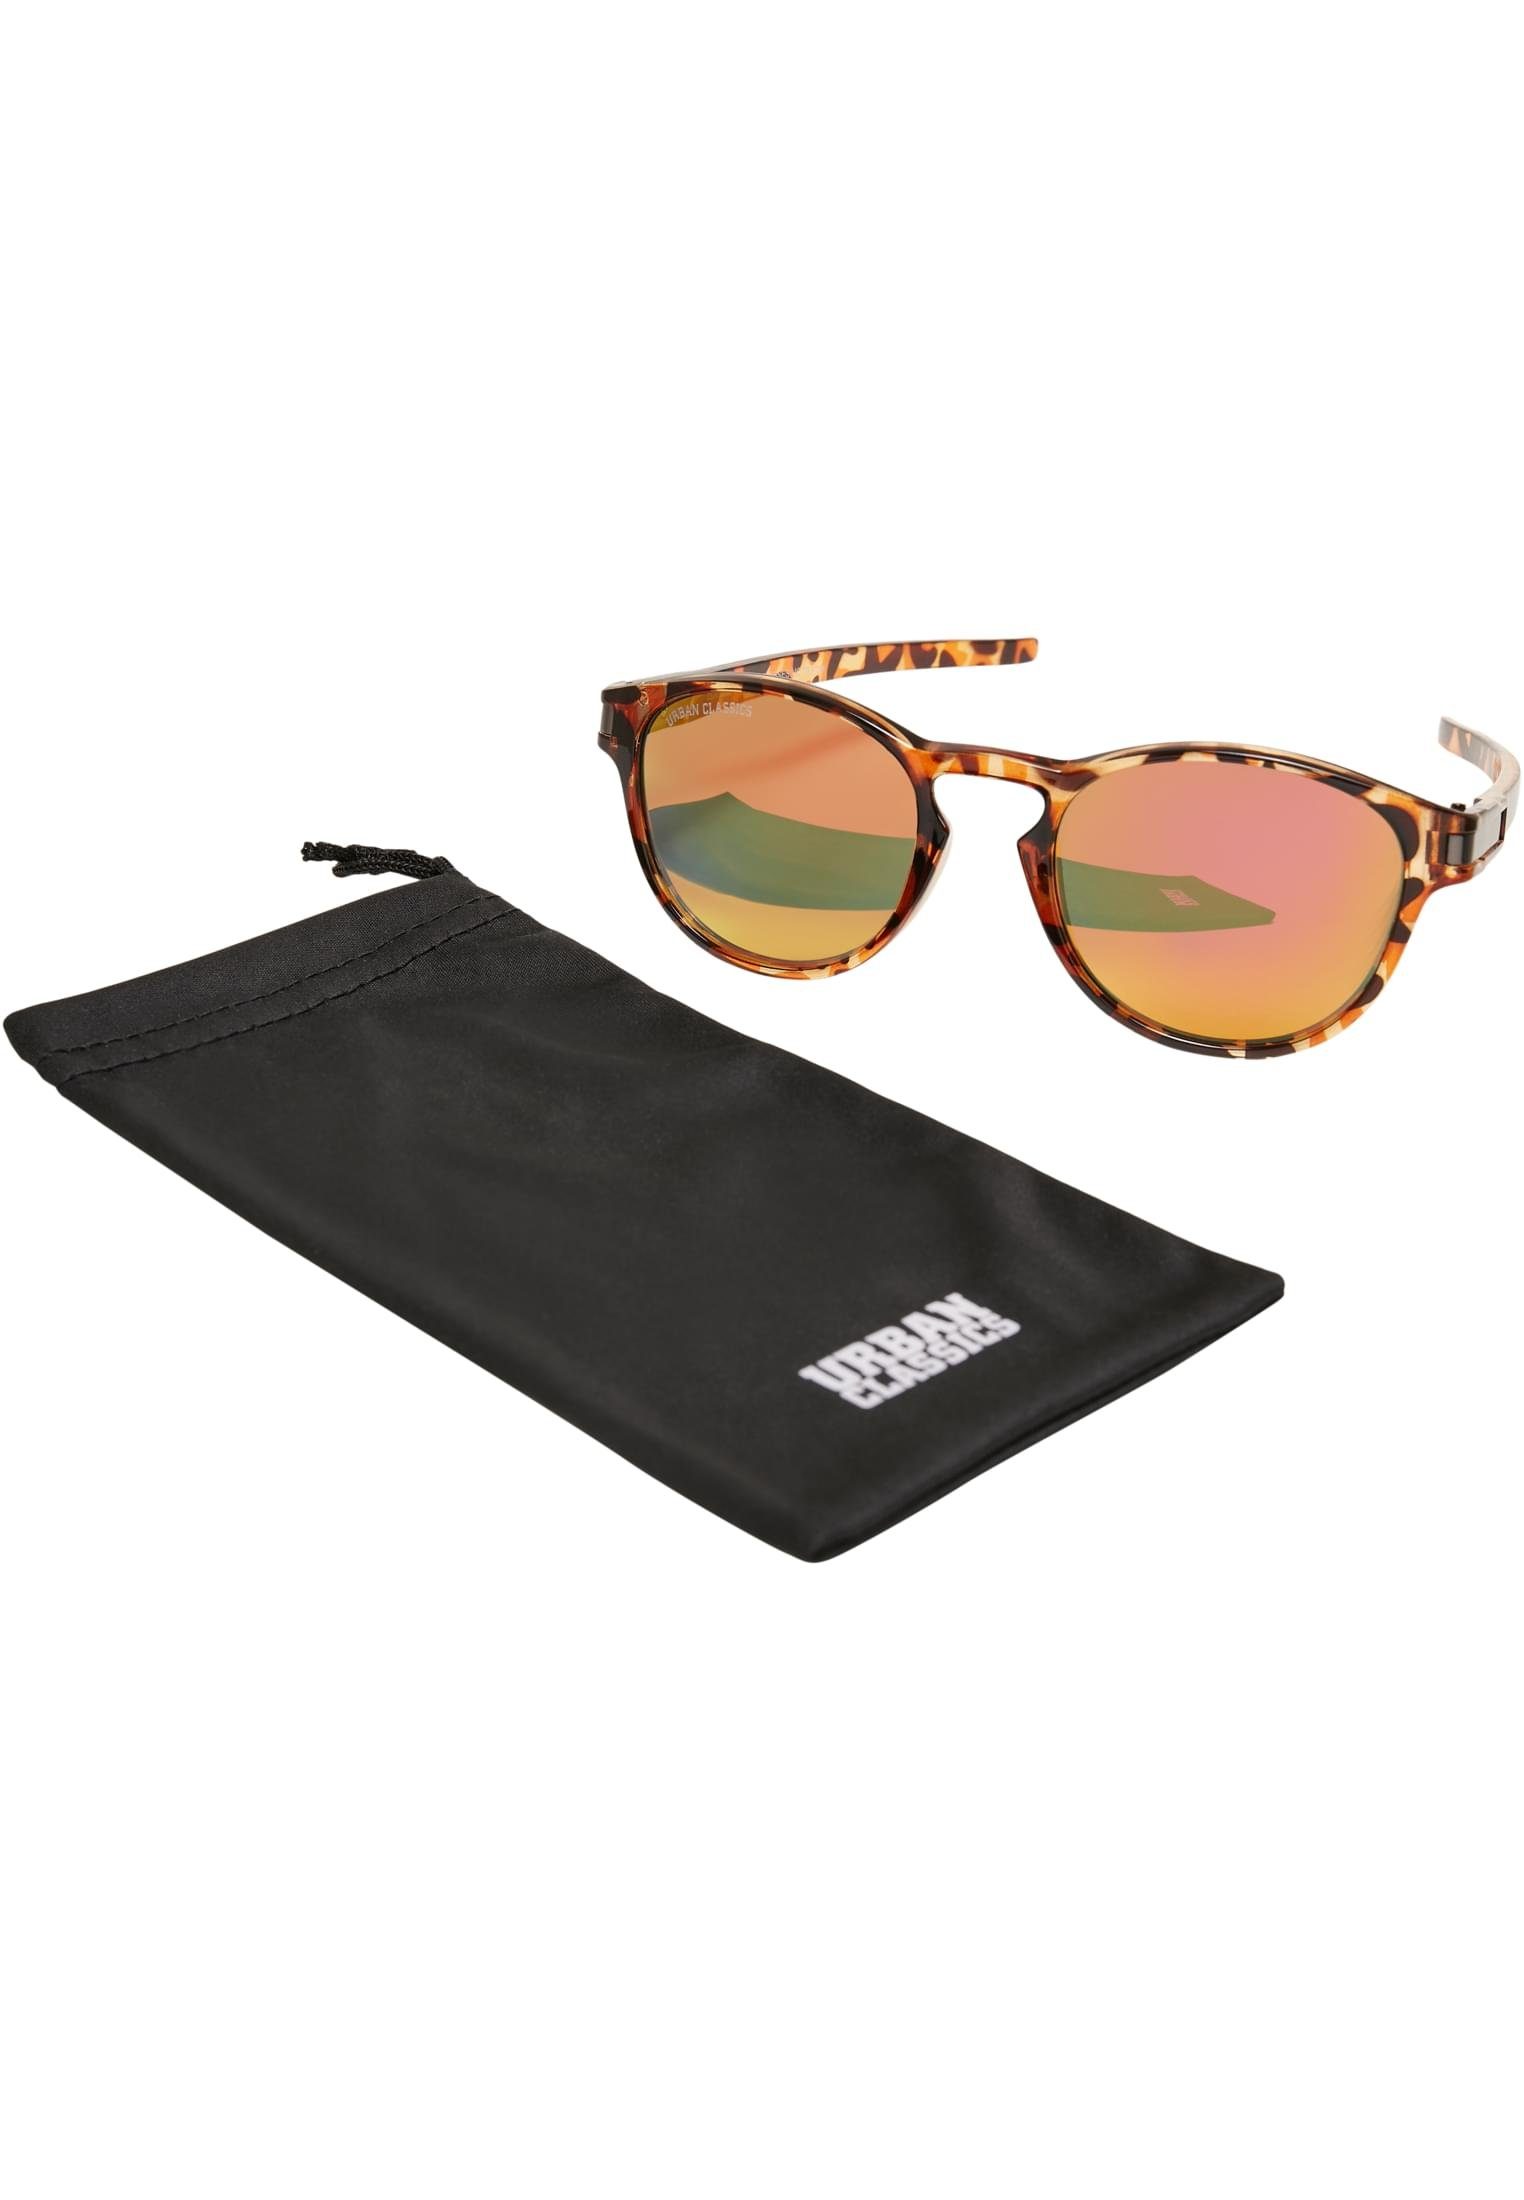 URBAN CLASSICS Sonnenbrille Accessoires UC leo/orange brown Sunglasses 106